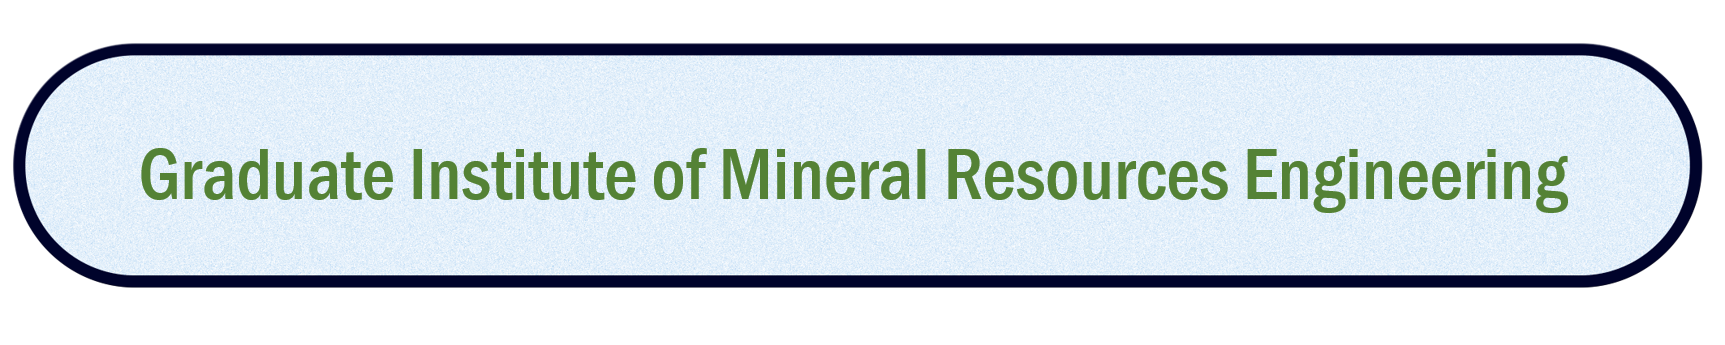 Graduate Institute of Mineral Resources Engineering